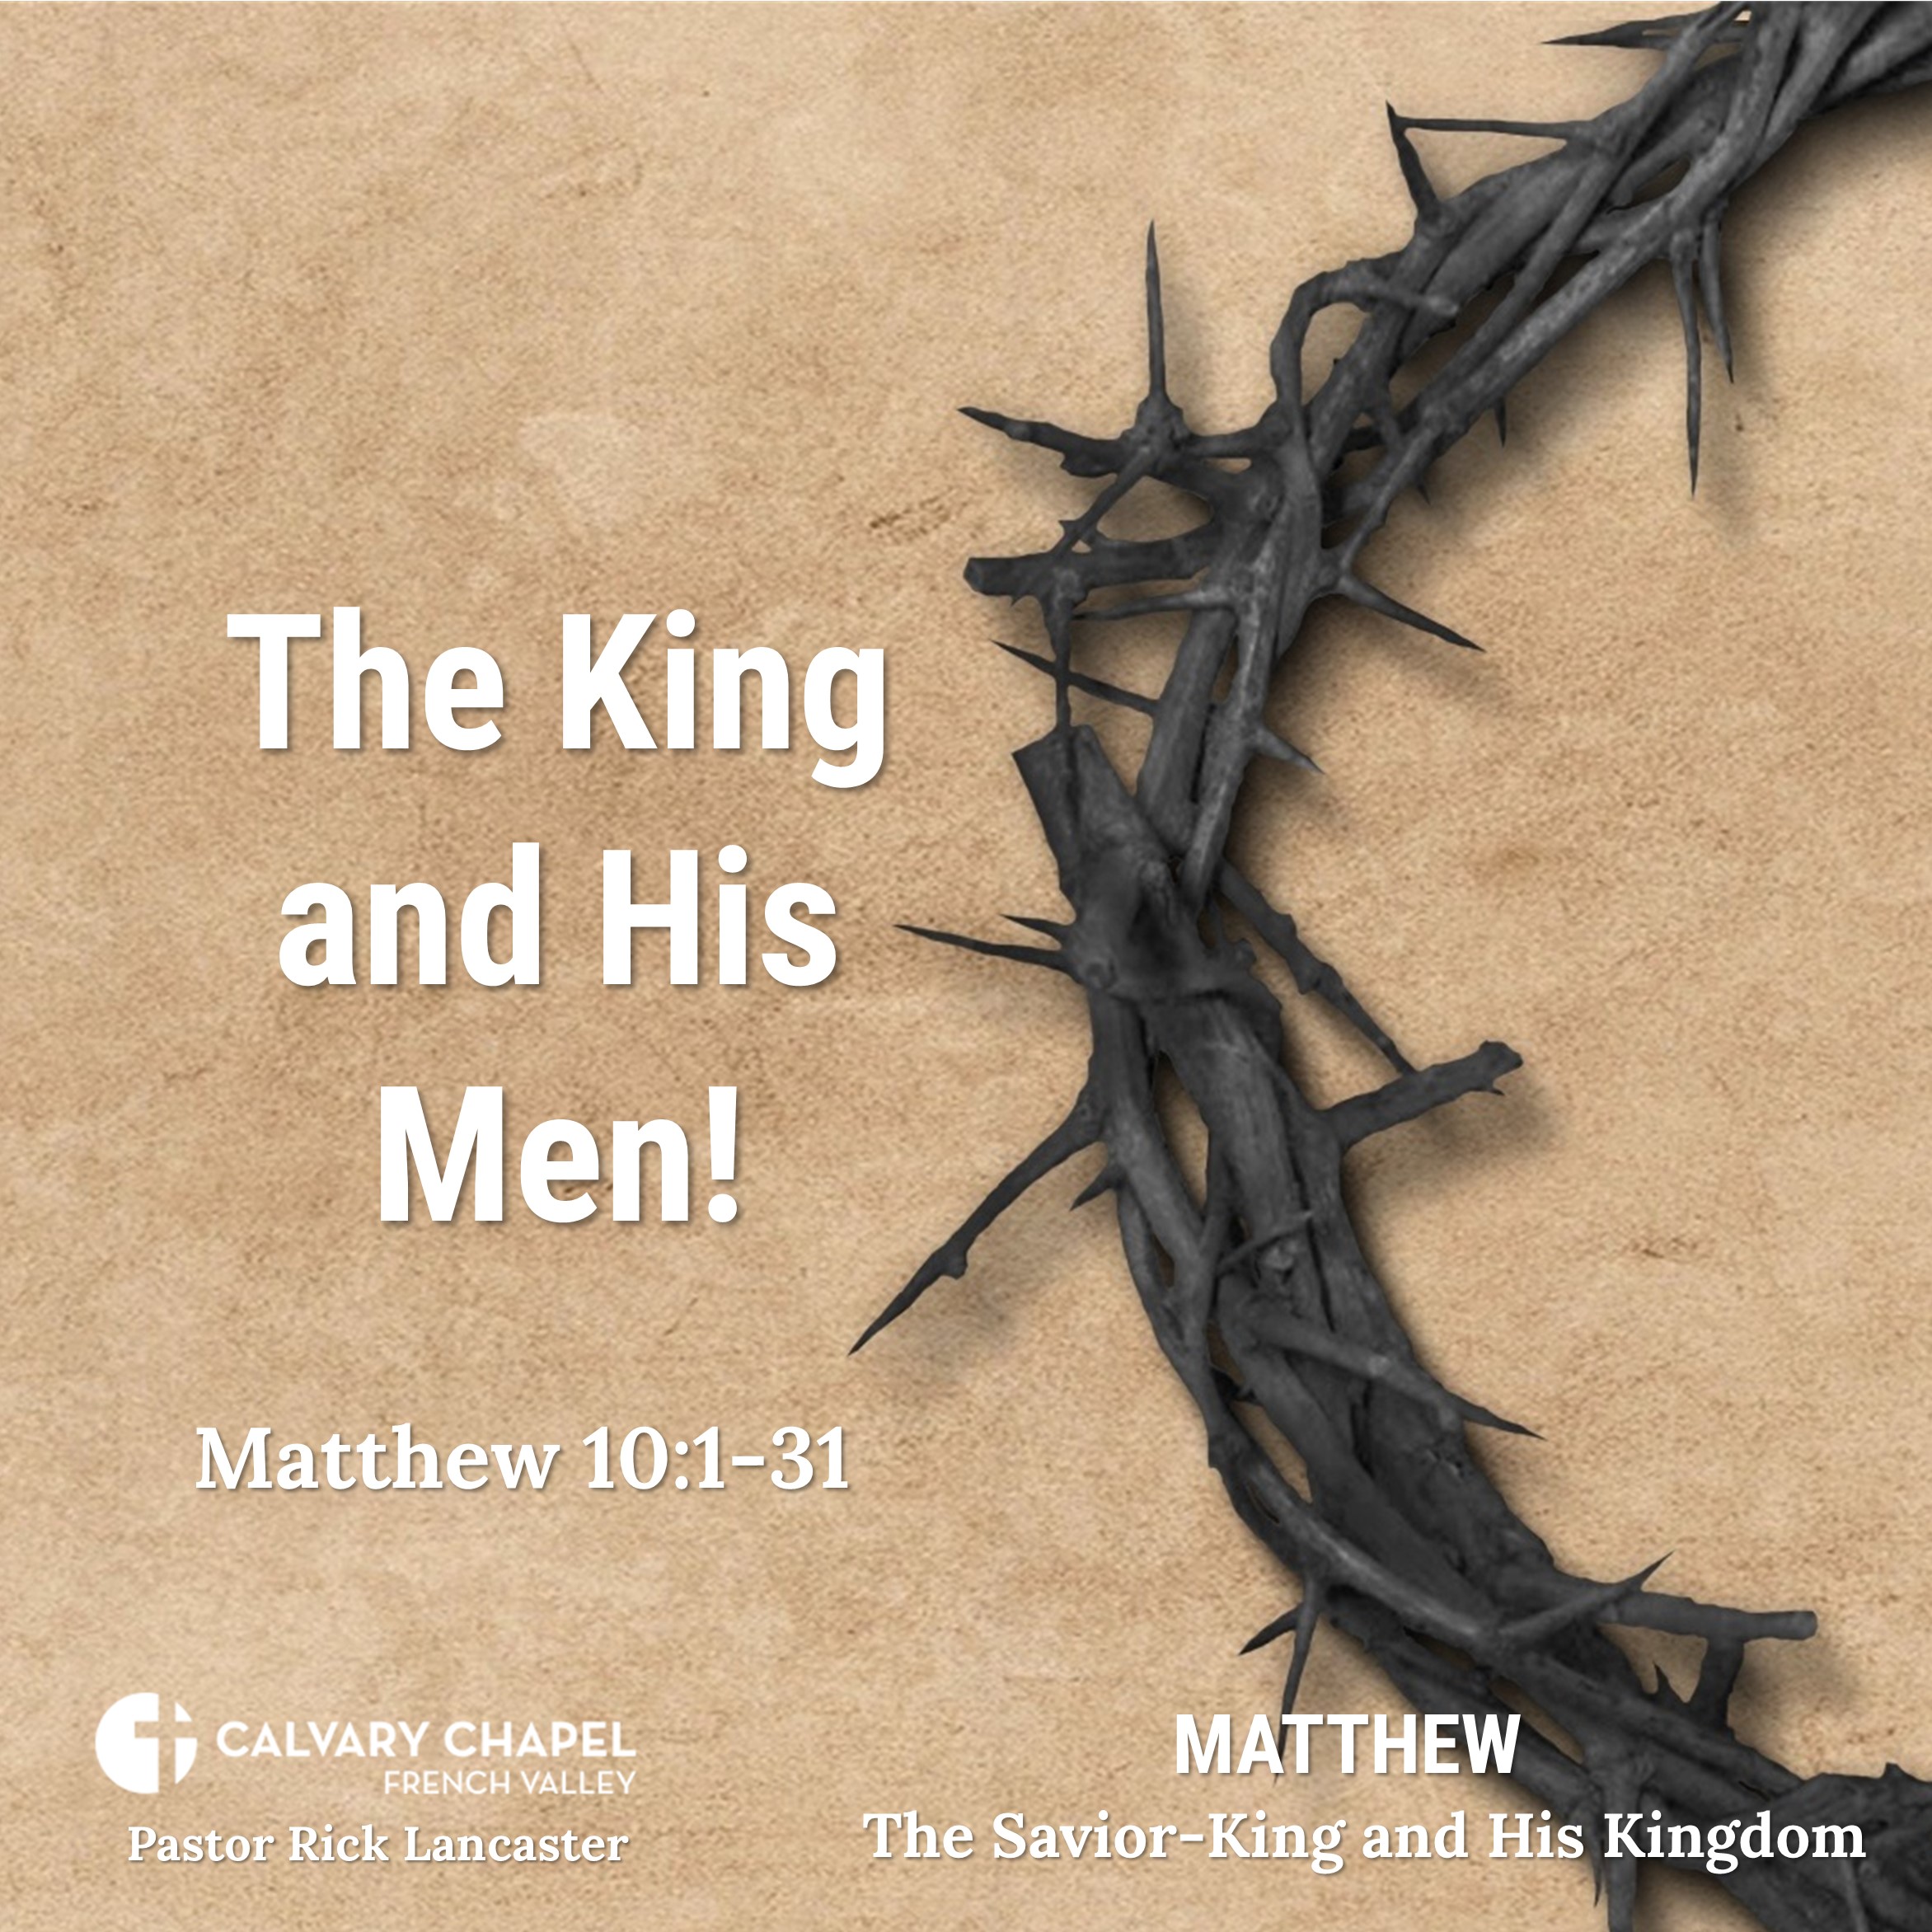 The King and His Men! – Matthew 10:1-31 - Matthew: The Savior-King and His Kingdom